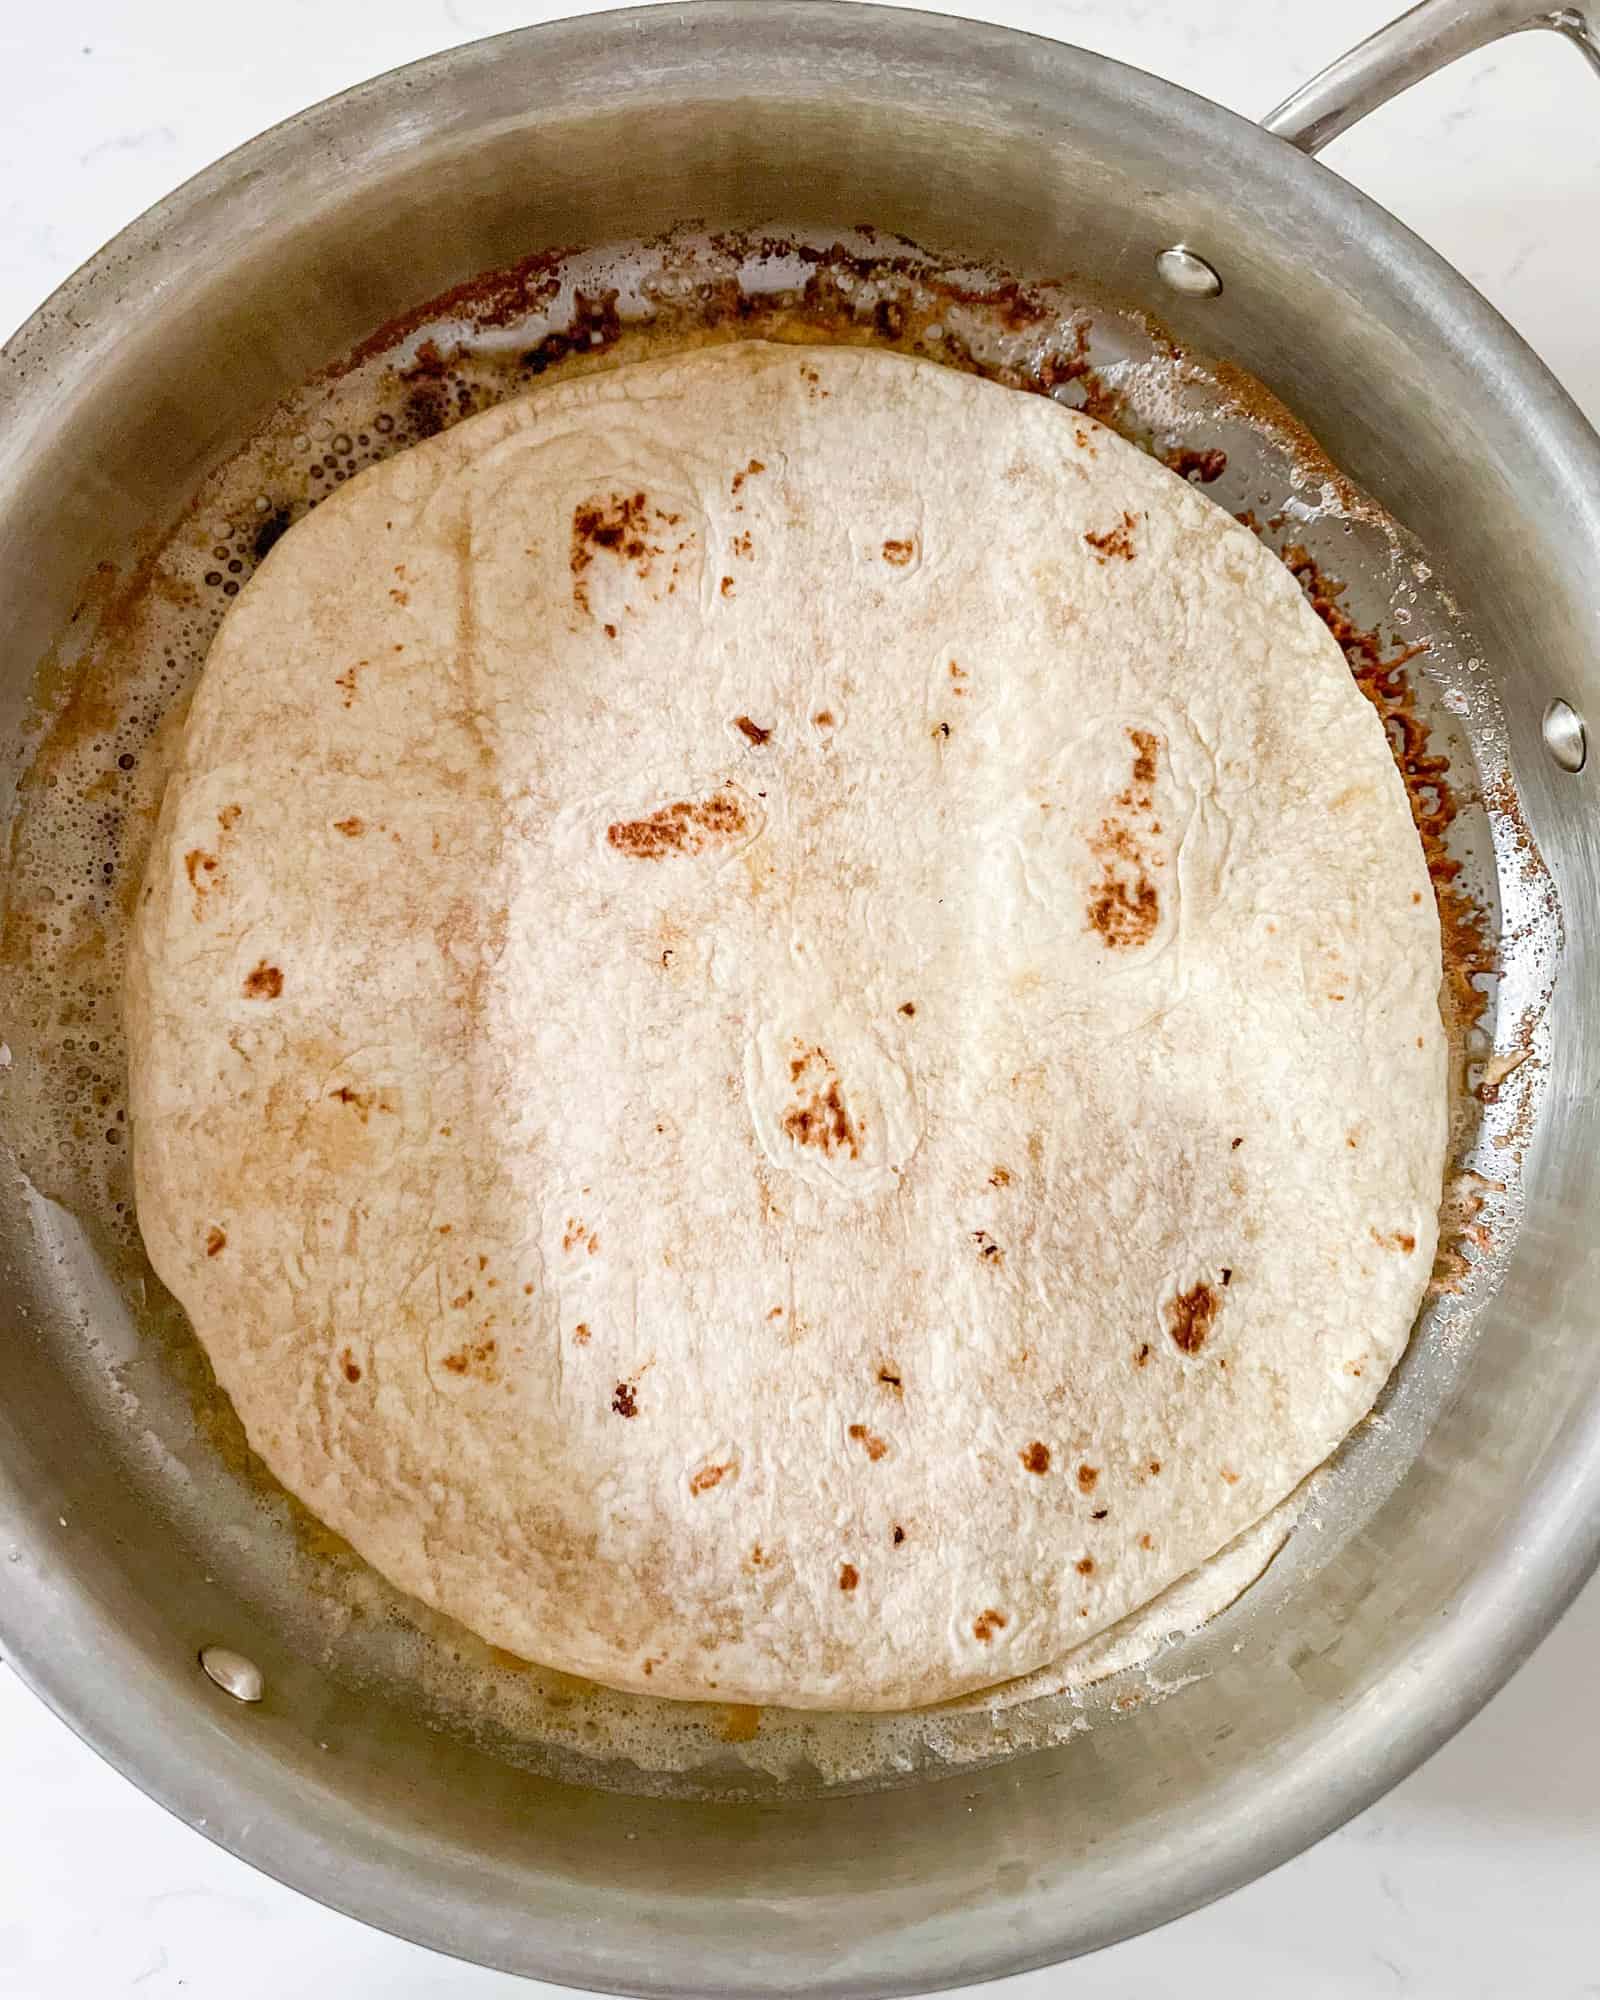 cheese quesadilla in a frying pan.